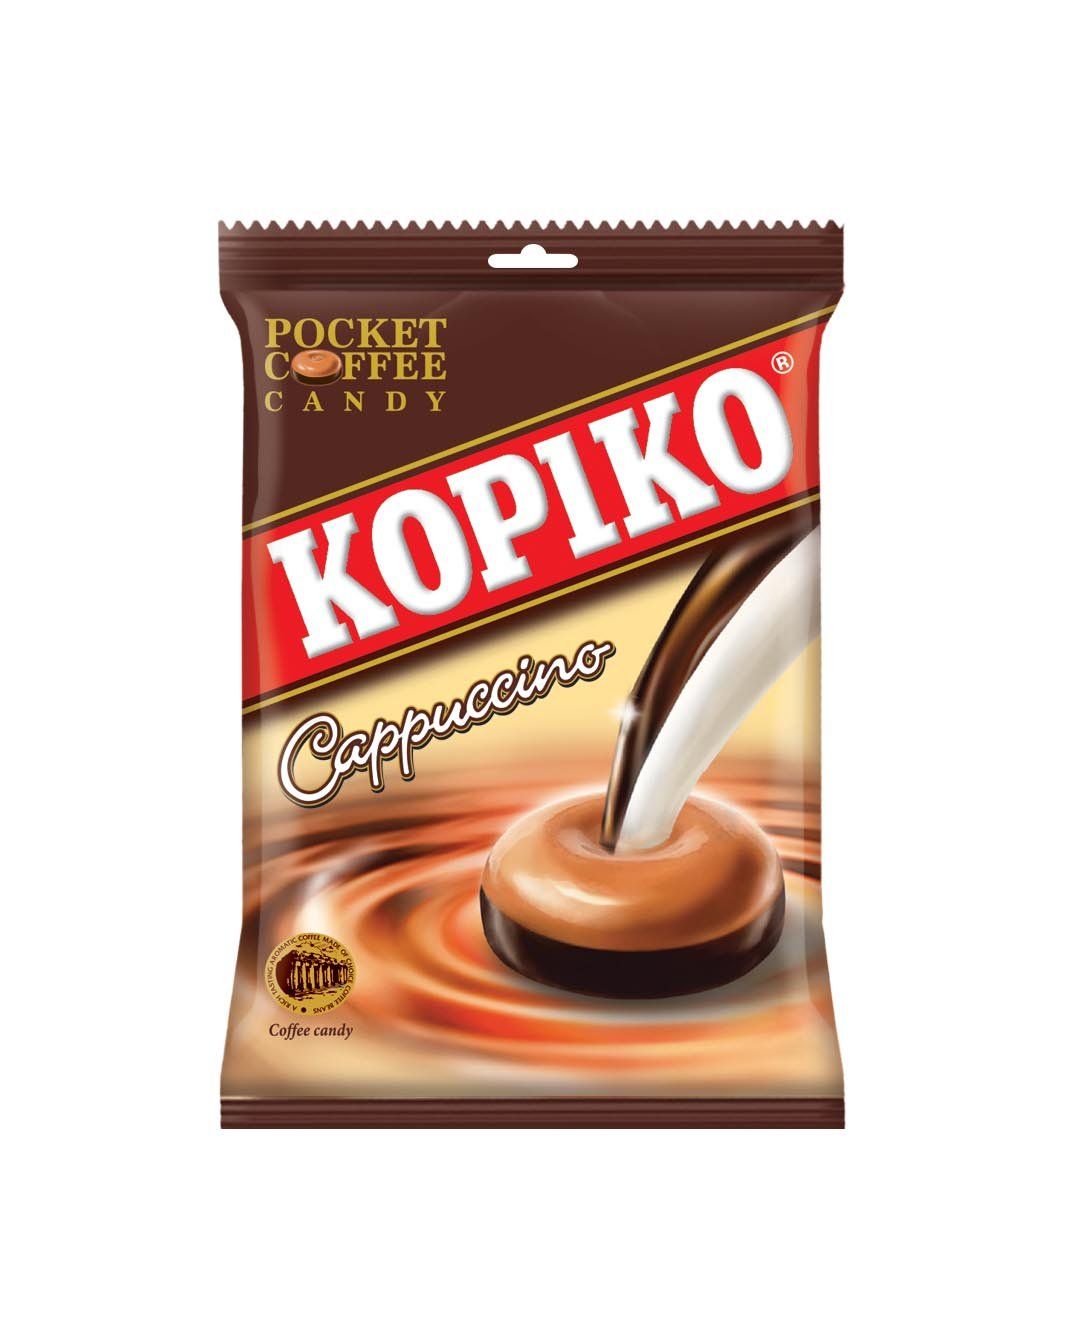 Kopiko Coffee Cappuccino Candy Image